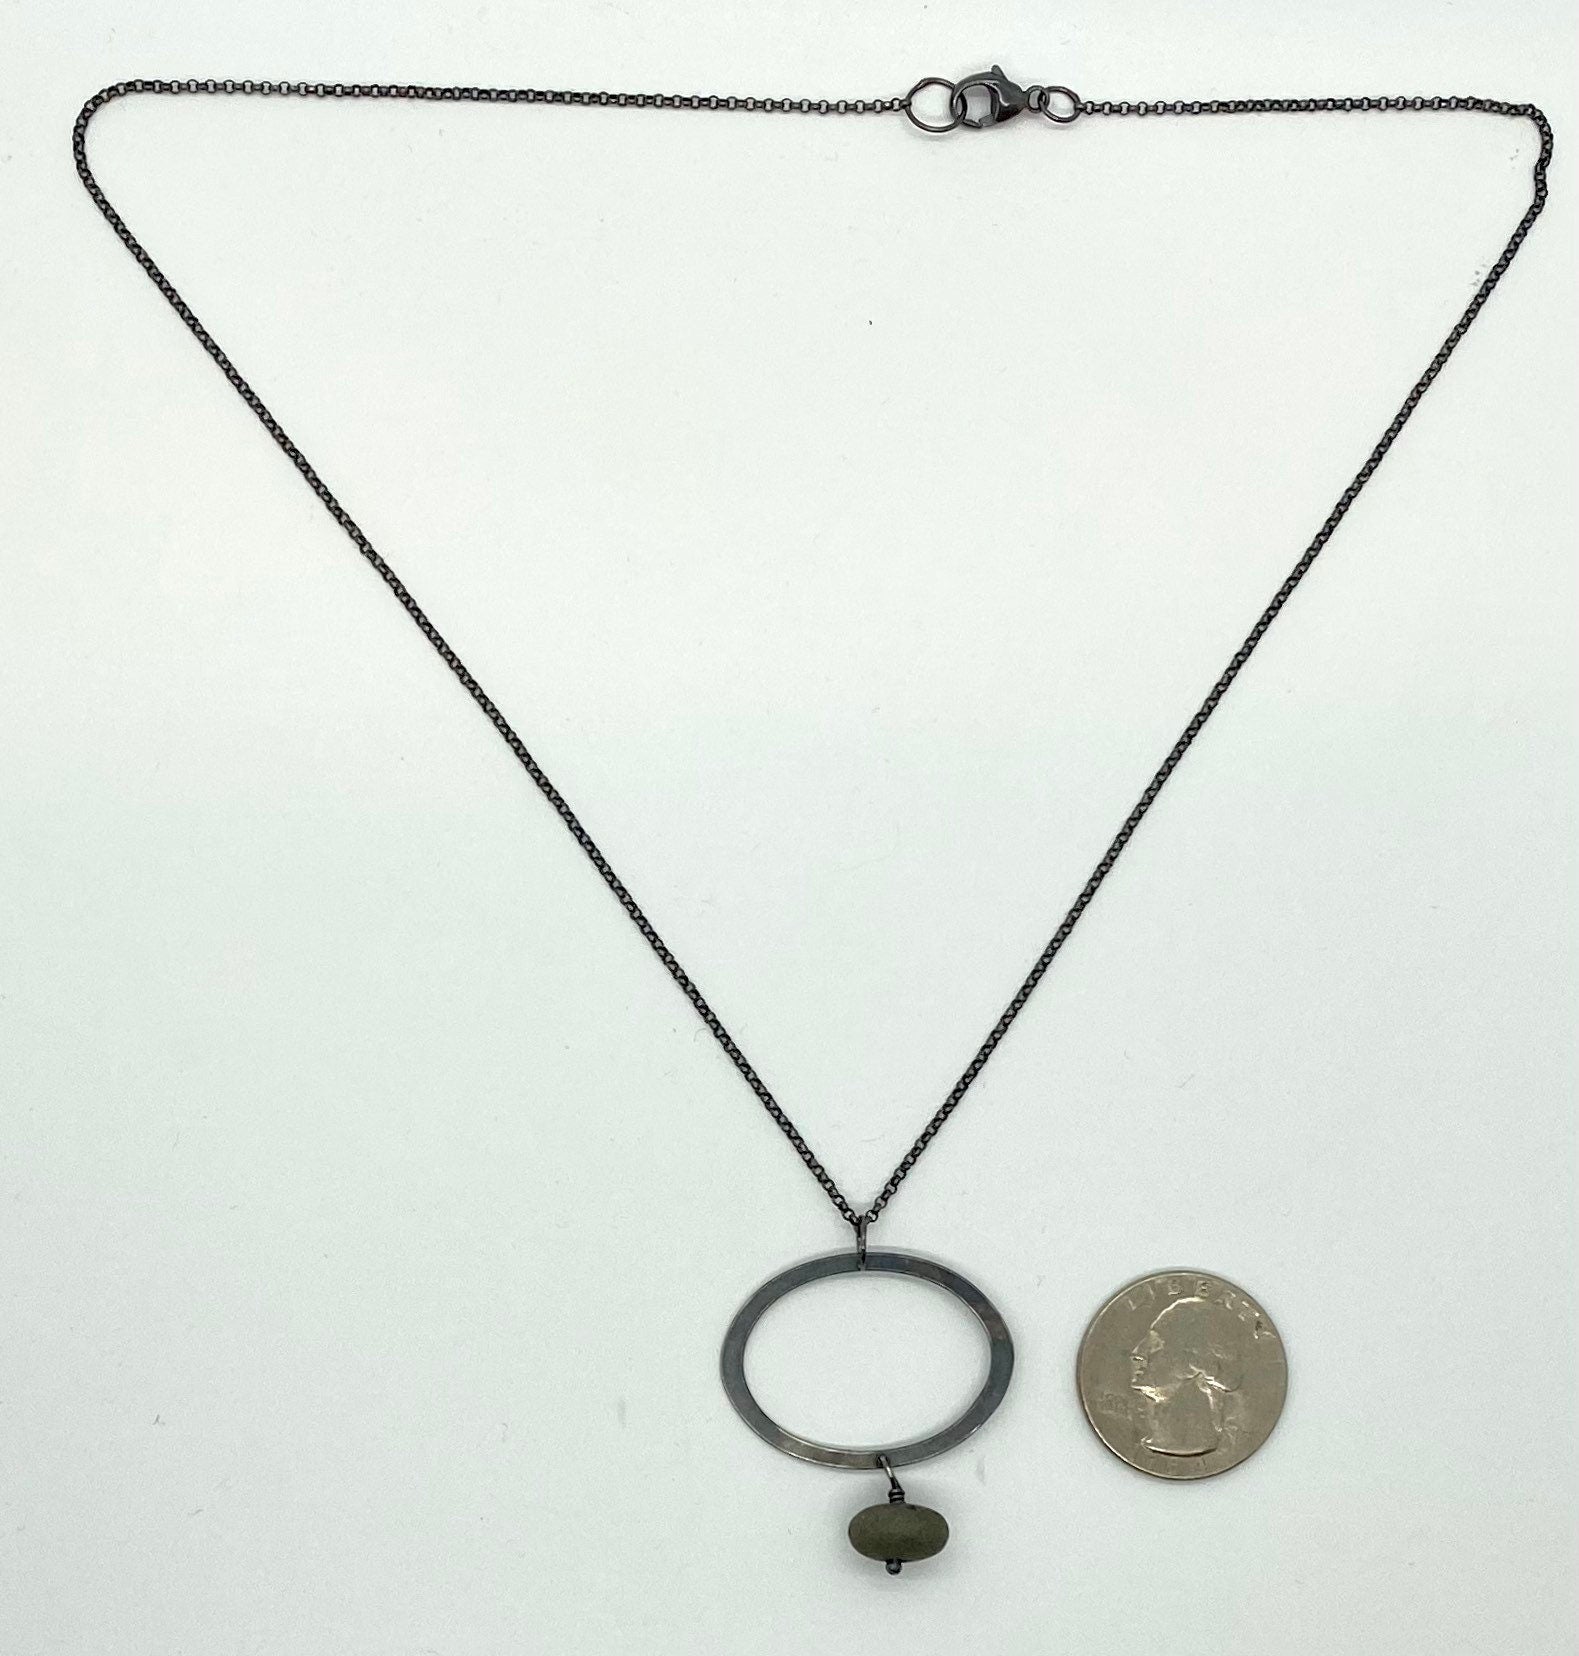 Oval Rock Necklace – Lakestone Jewelry